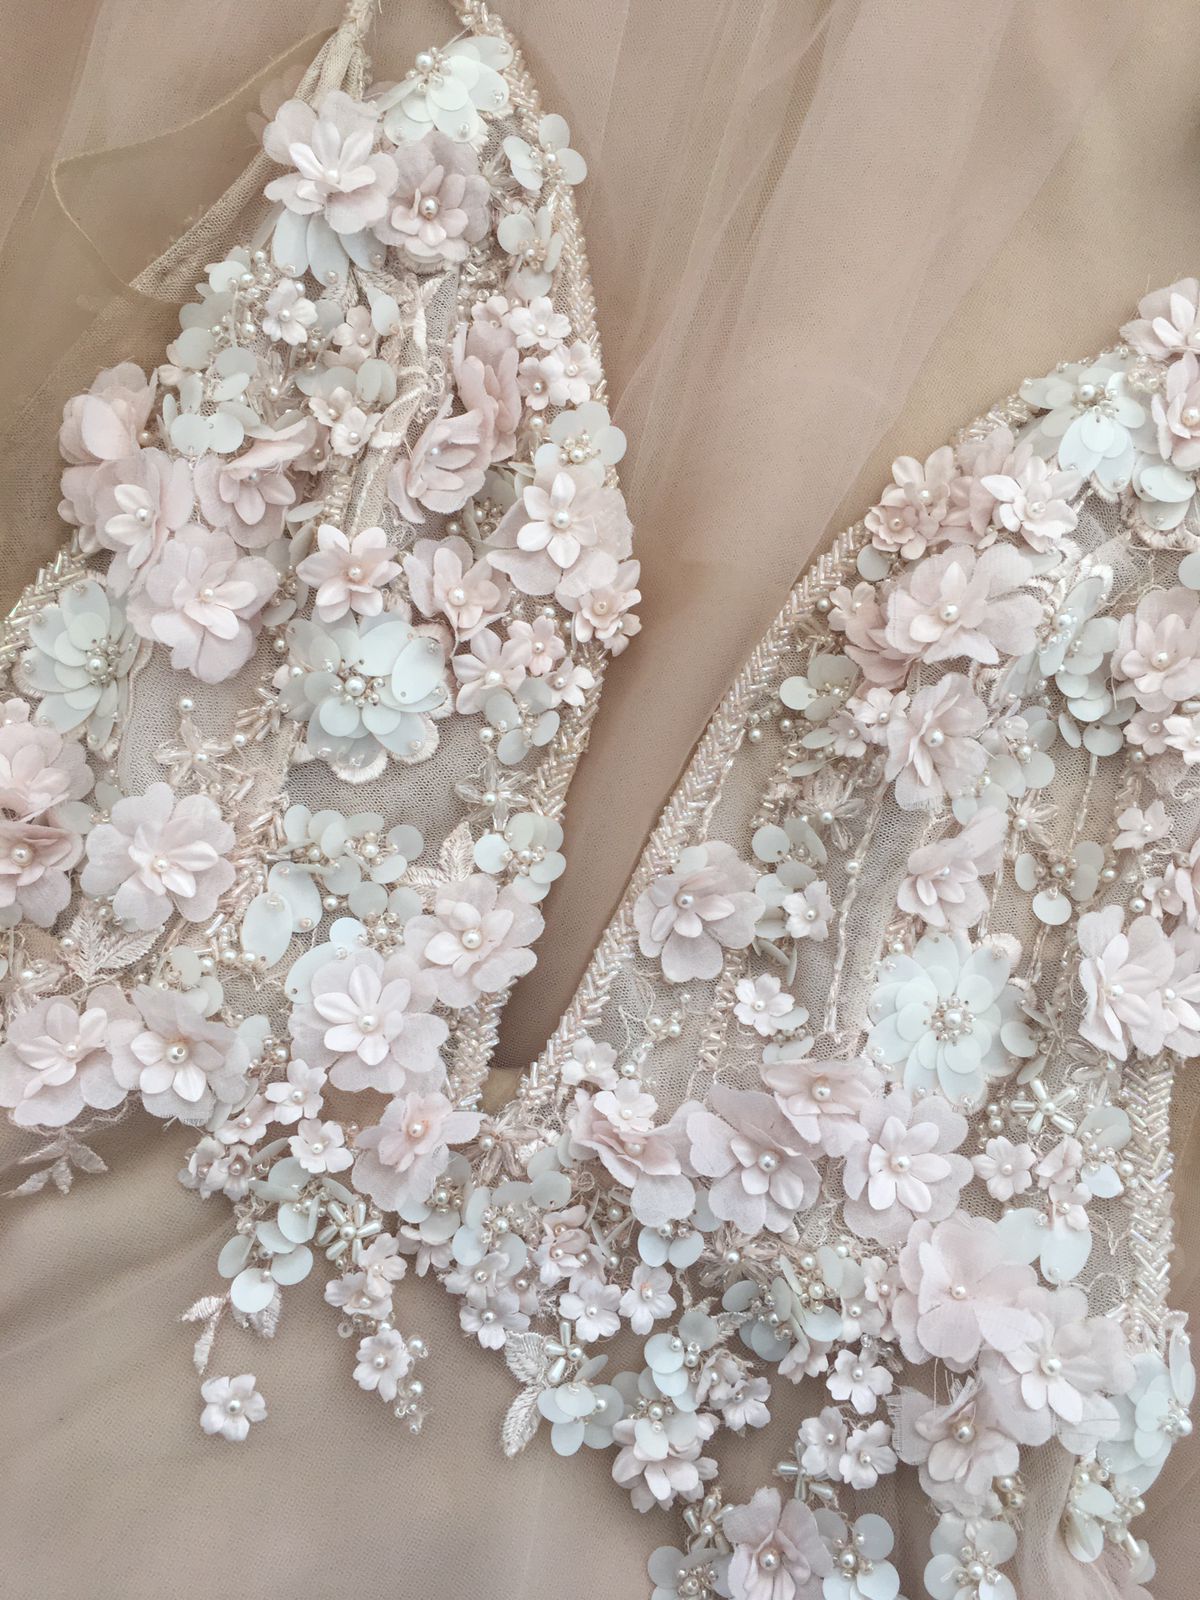 Cherry Blossom | Dress | Sadie Bosworth Atelier